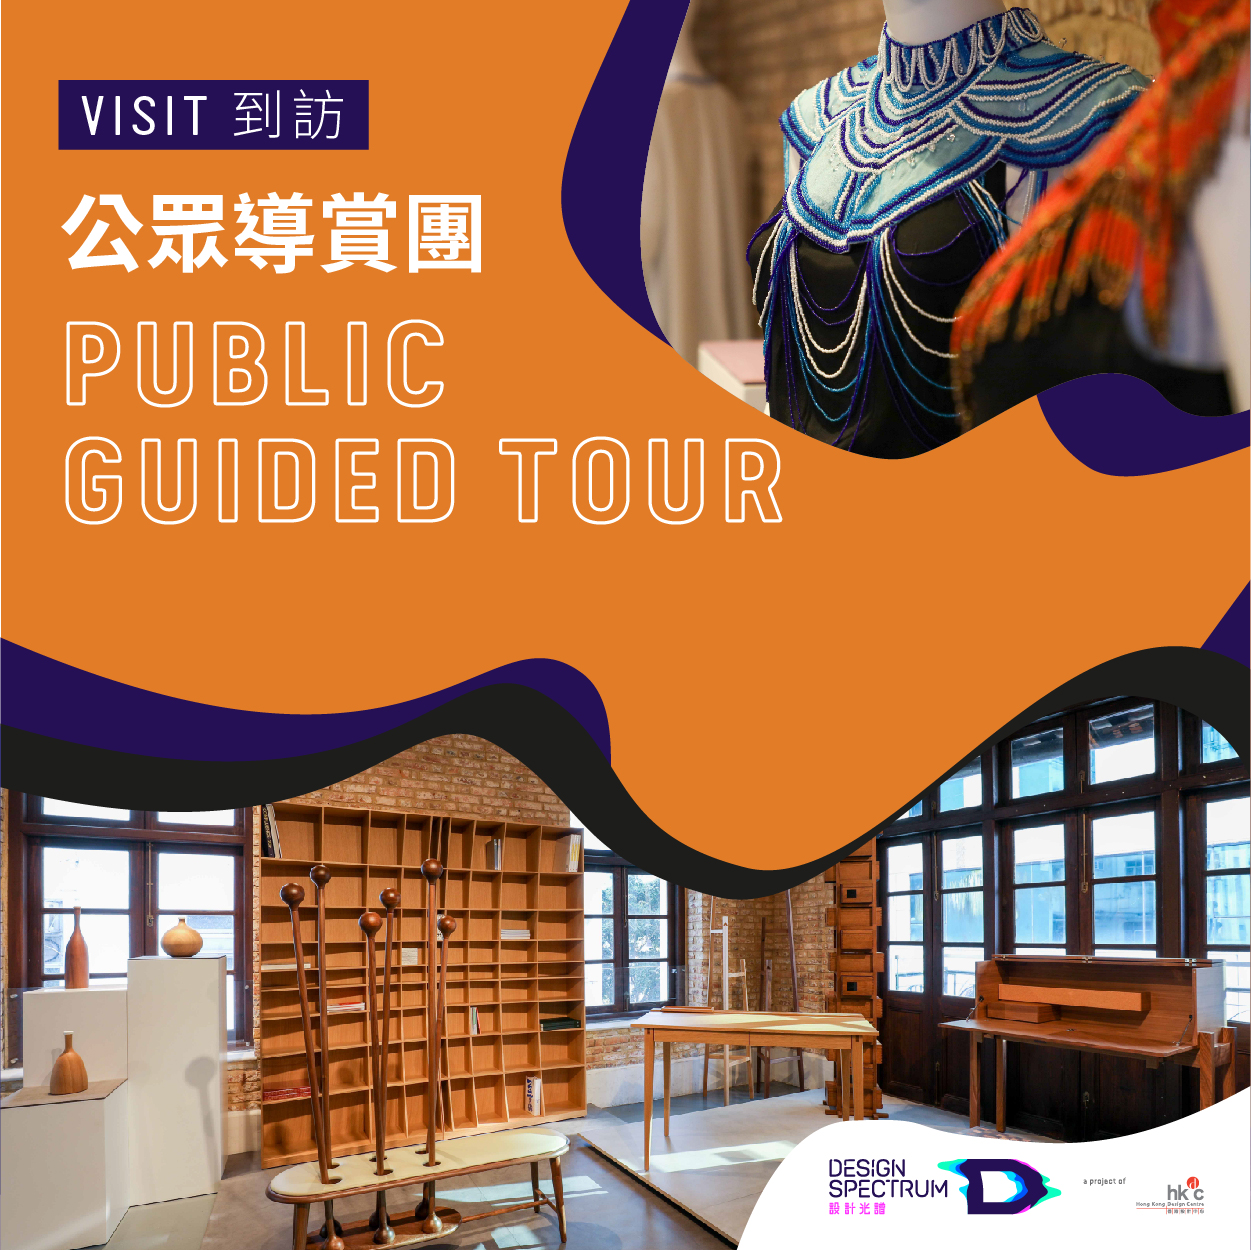 guided tour design